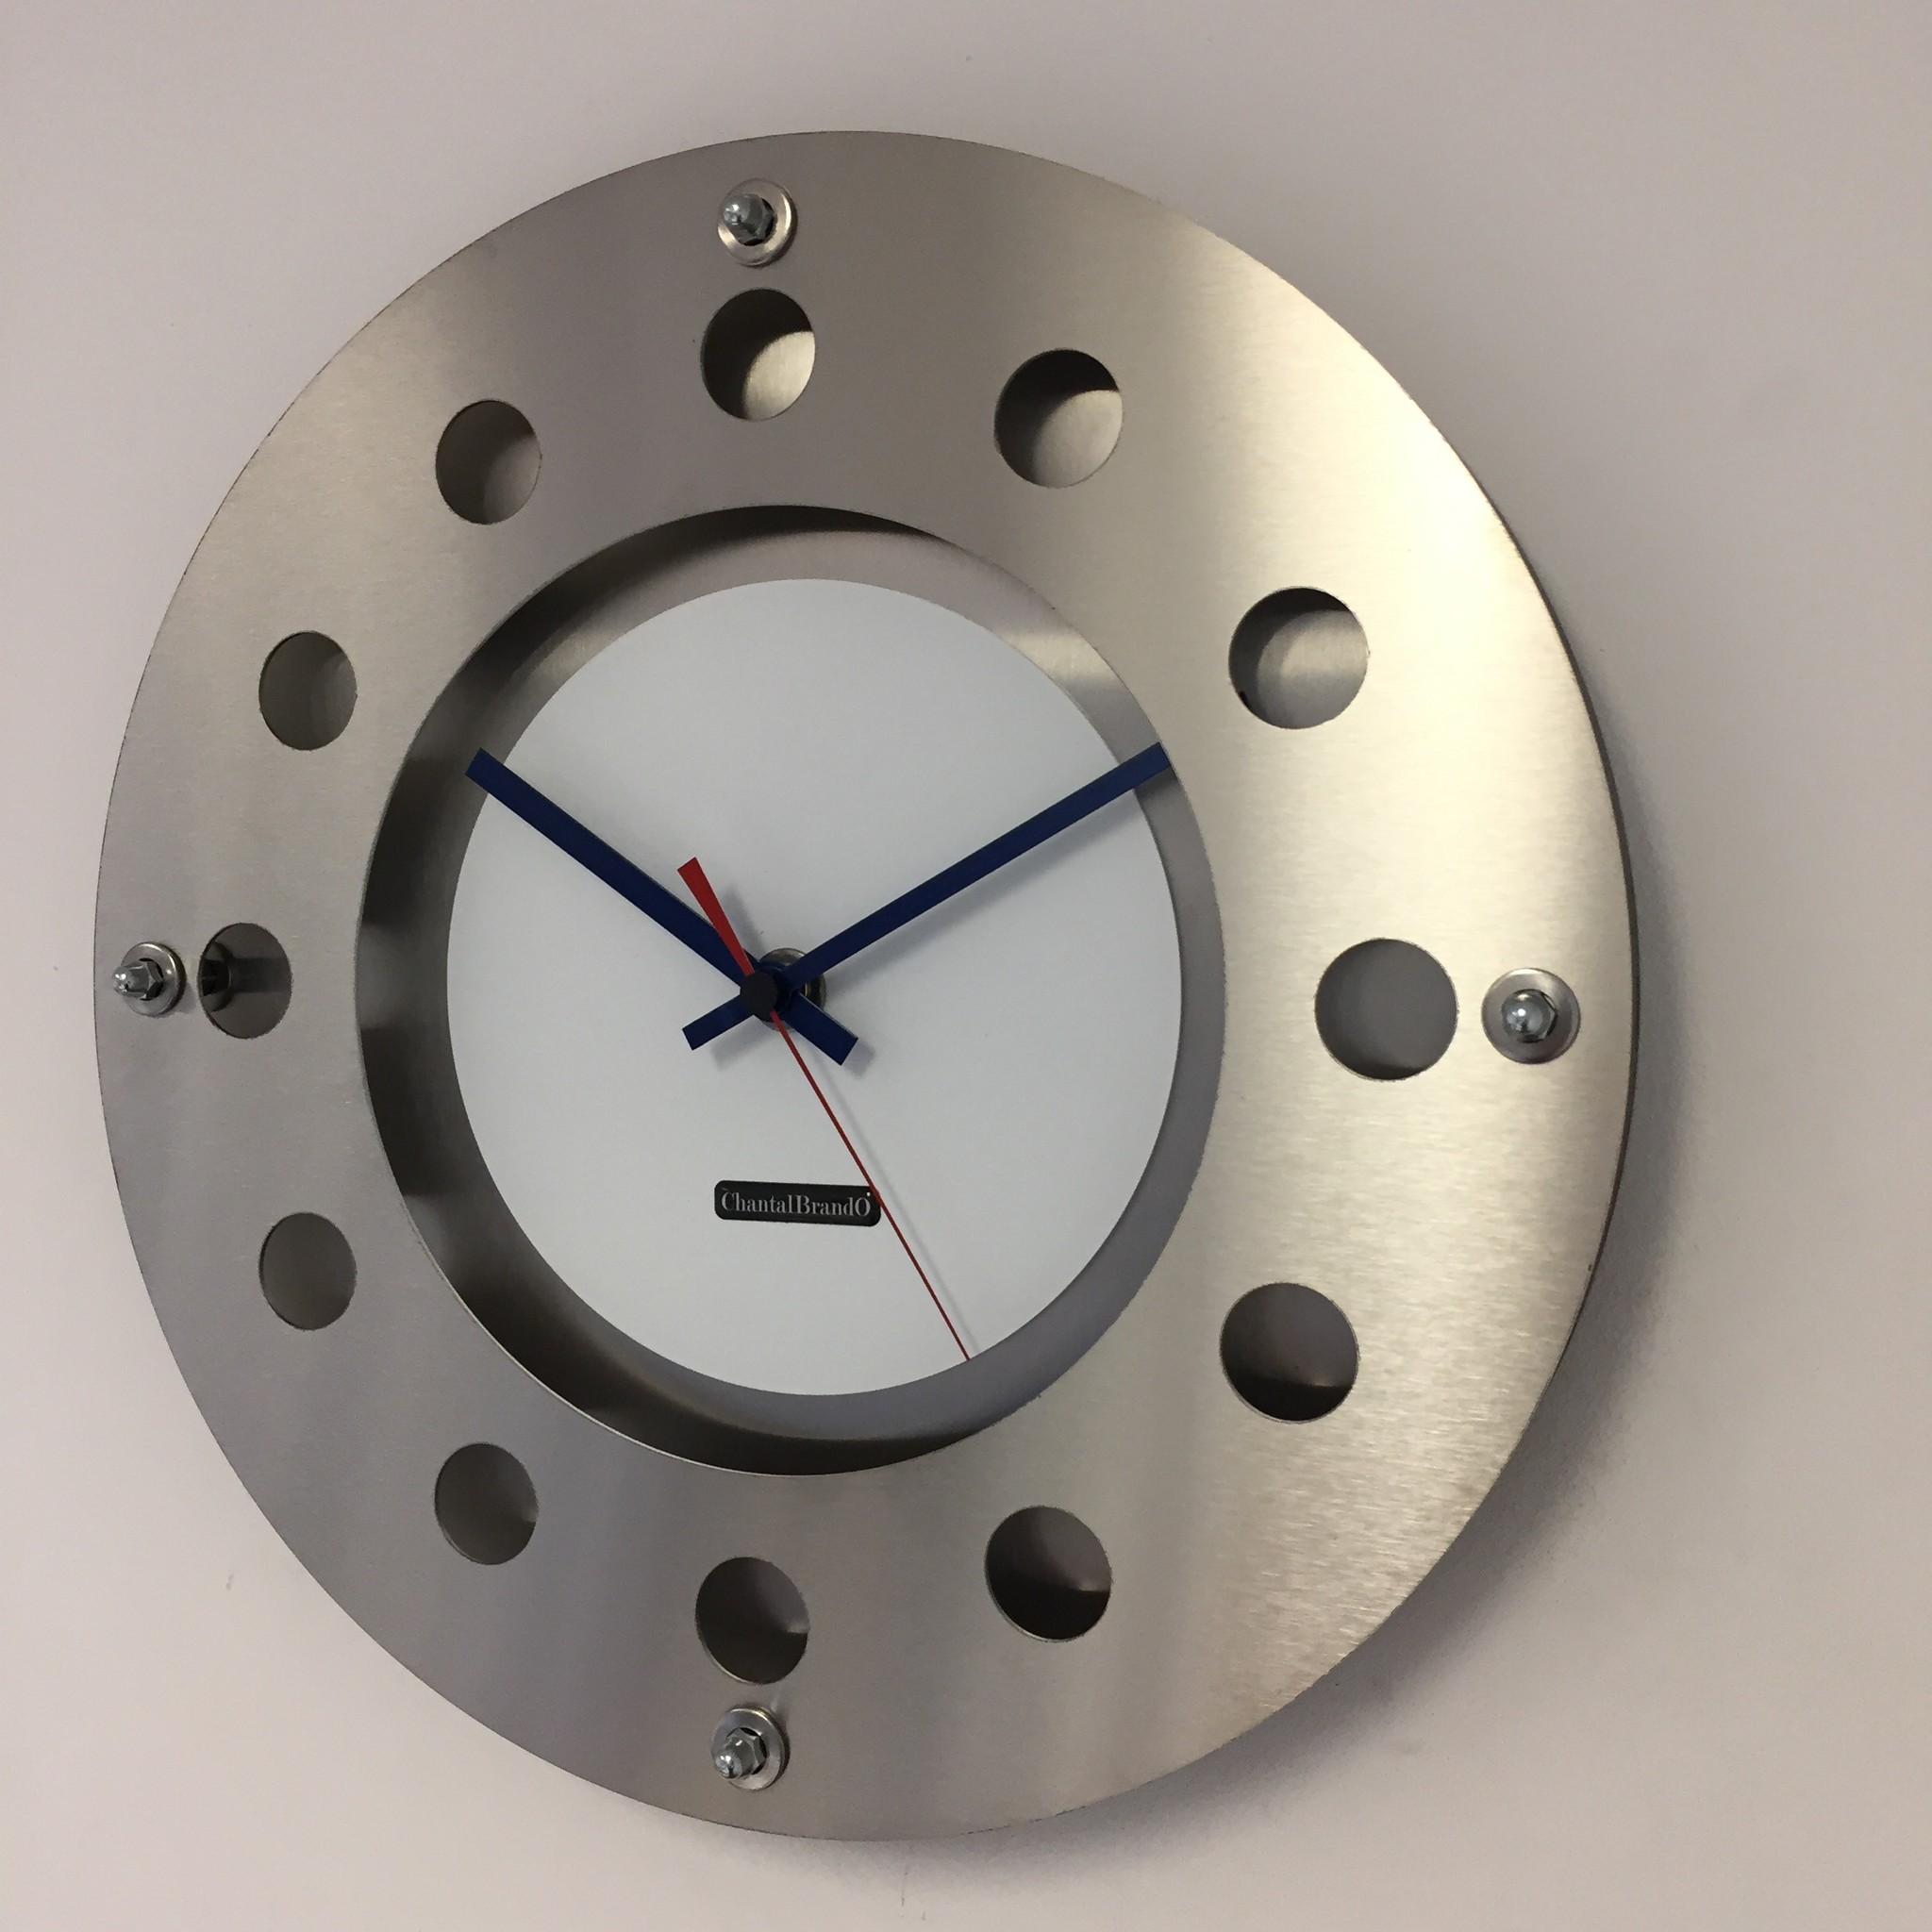 ChantalBrandO Design - Wall clock Mecanica Small Inside Circle White Darkblue Red Modern Dutch Design Handmade 40 cm